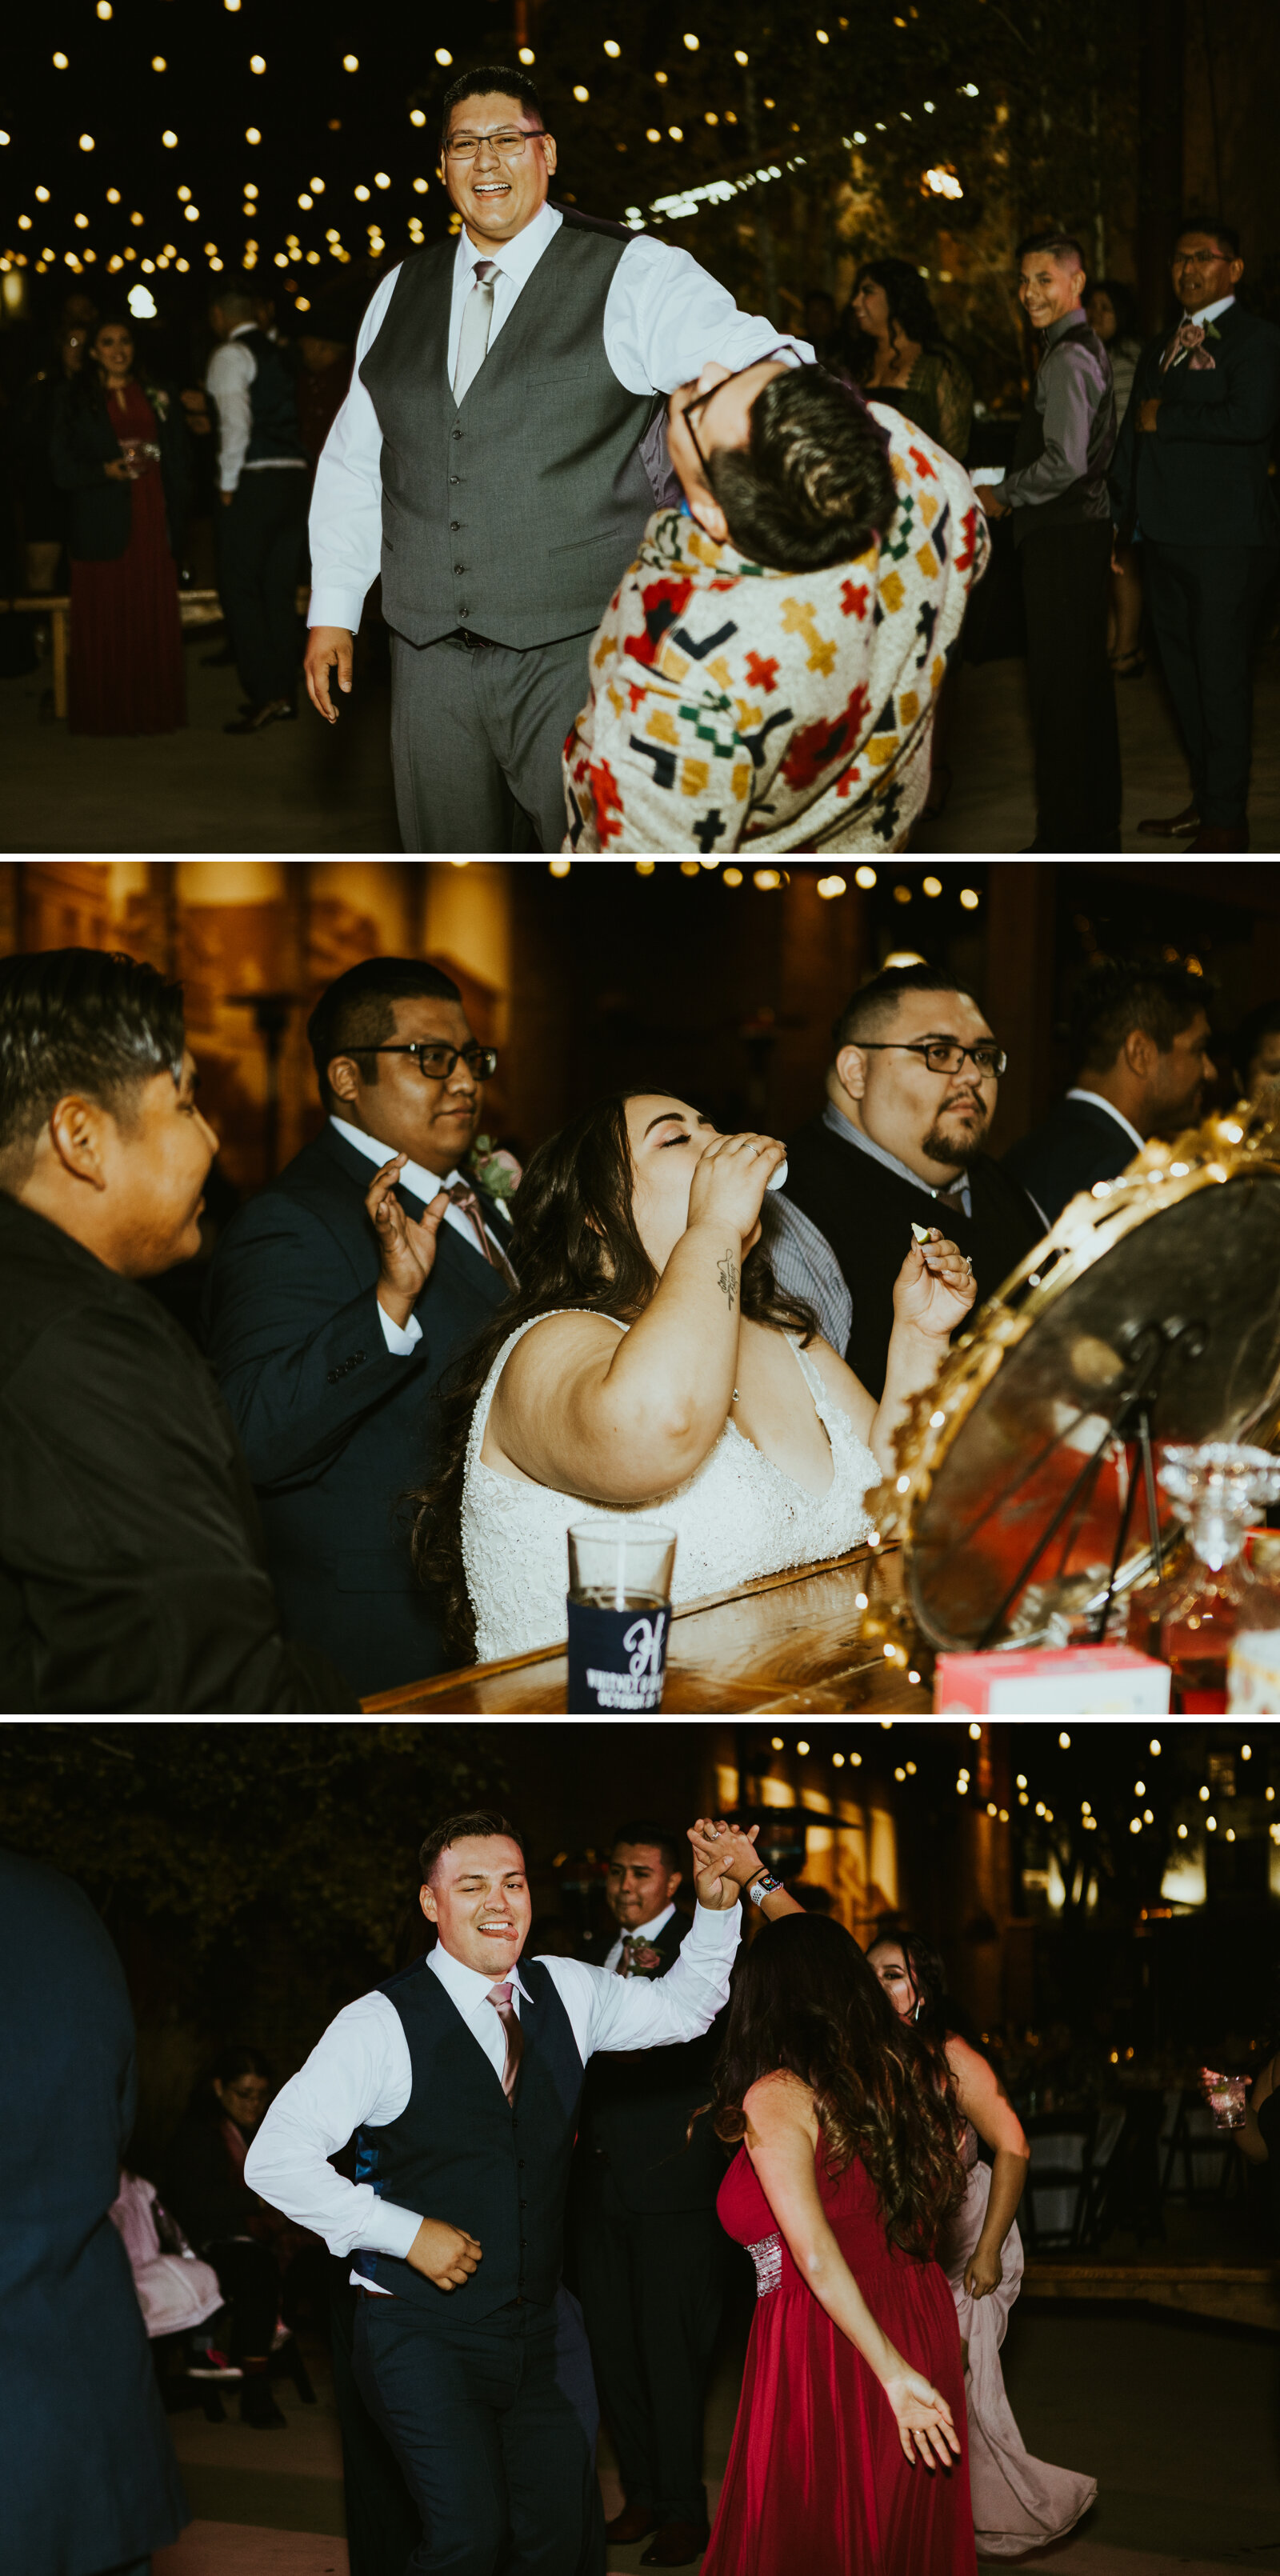 GRAND HIGHLAND HOTEL PRESCOTT ARIZONA WEDDING PHOTOGRAPHY WEDDING RECEPTION.jpg